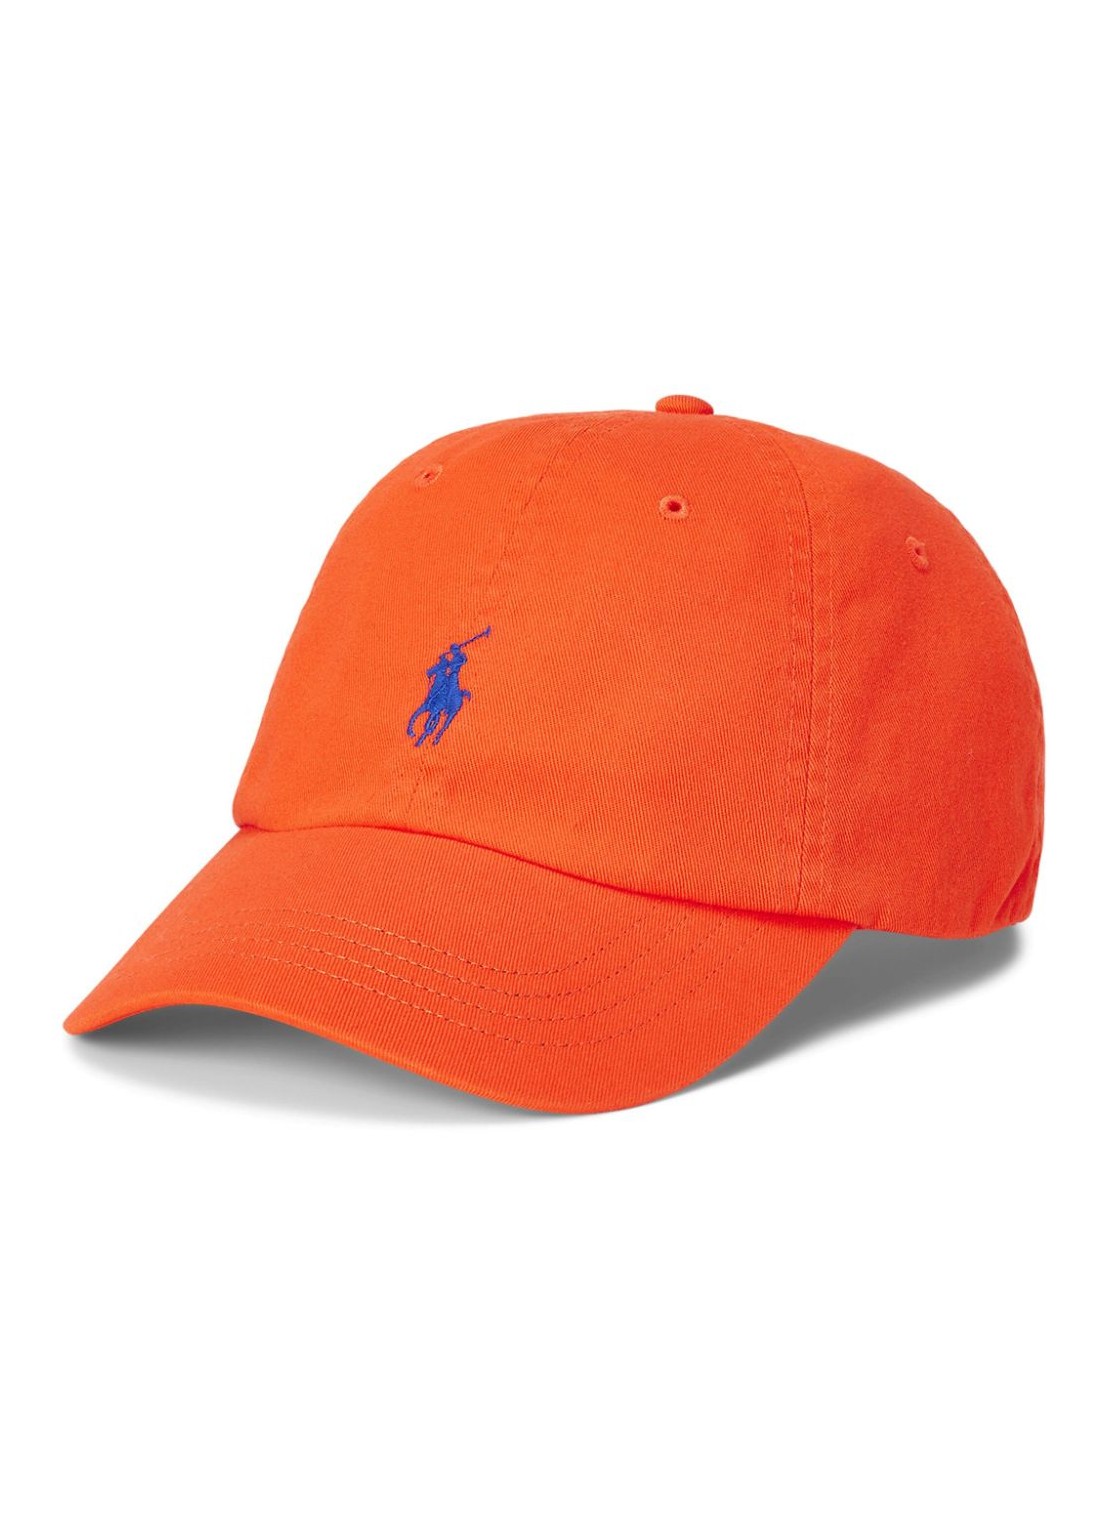 Gorras polo ralph lauren cap man cls sprt cap-hat 710667709014 sailing orange talla naranja
 